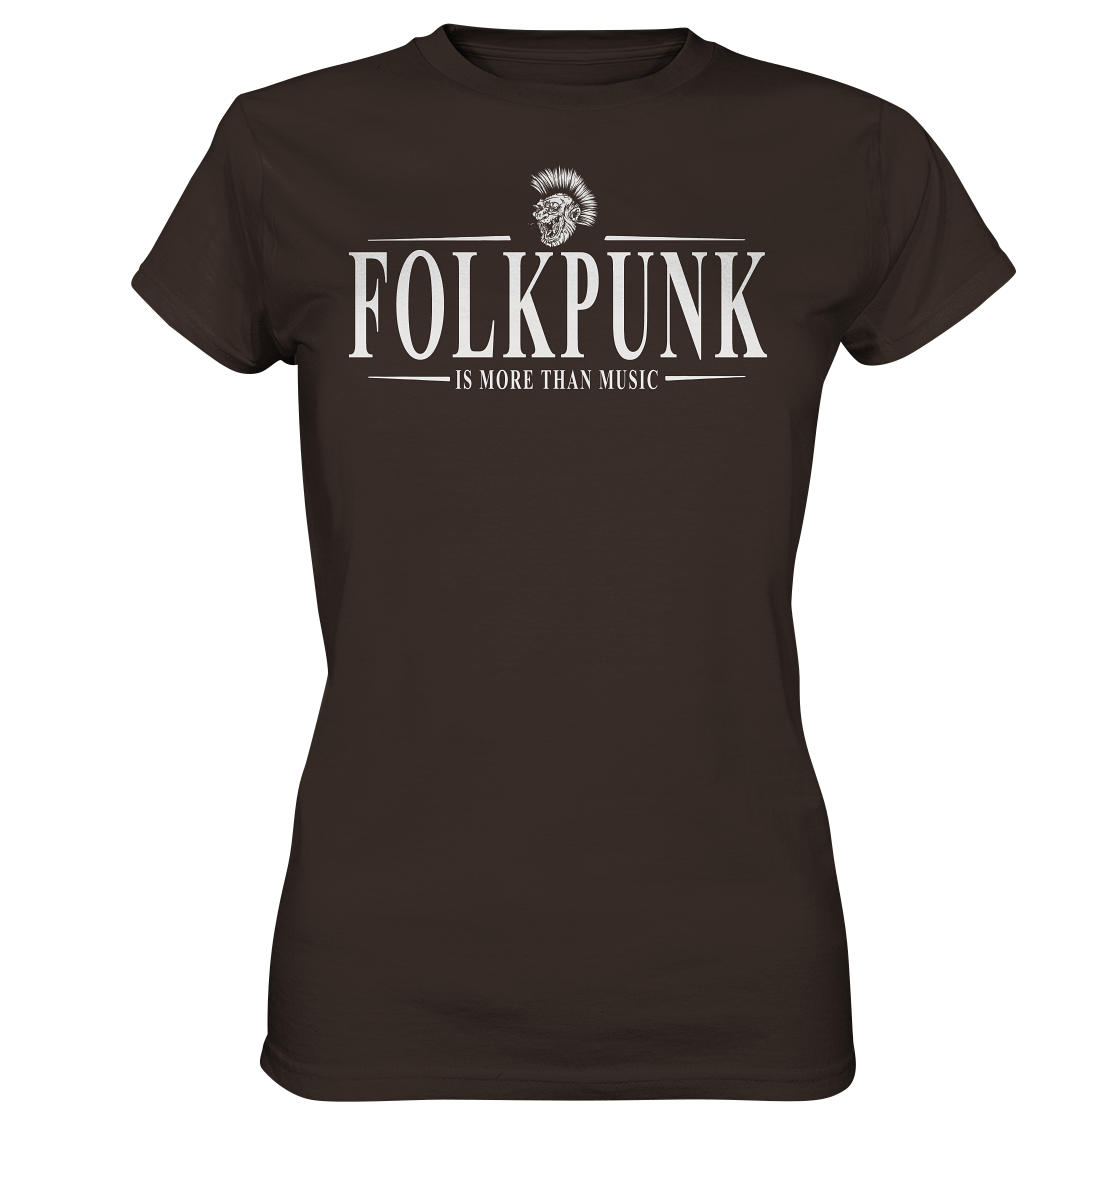 Folkpunk "Is More Than Music" - Ladies Premium Shirt